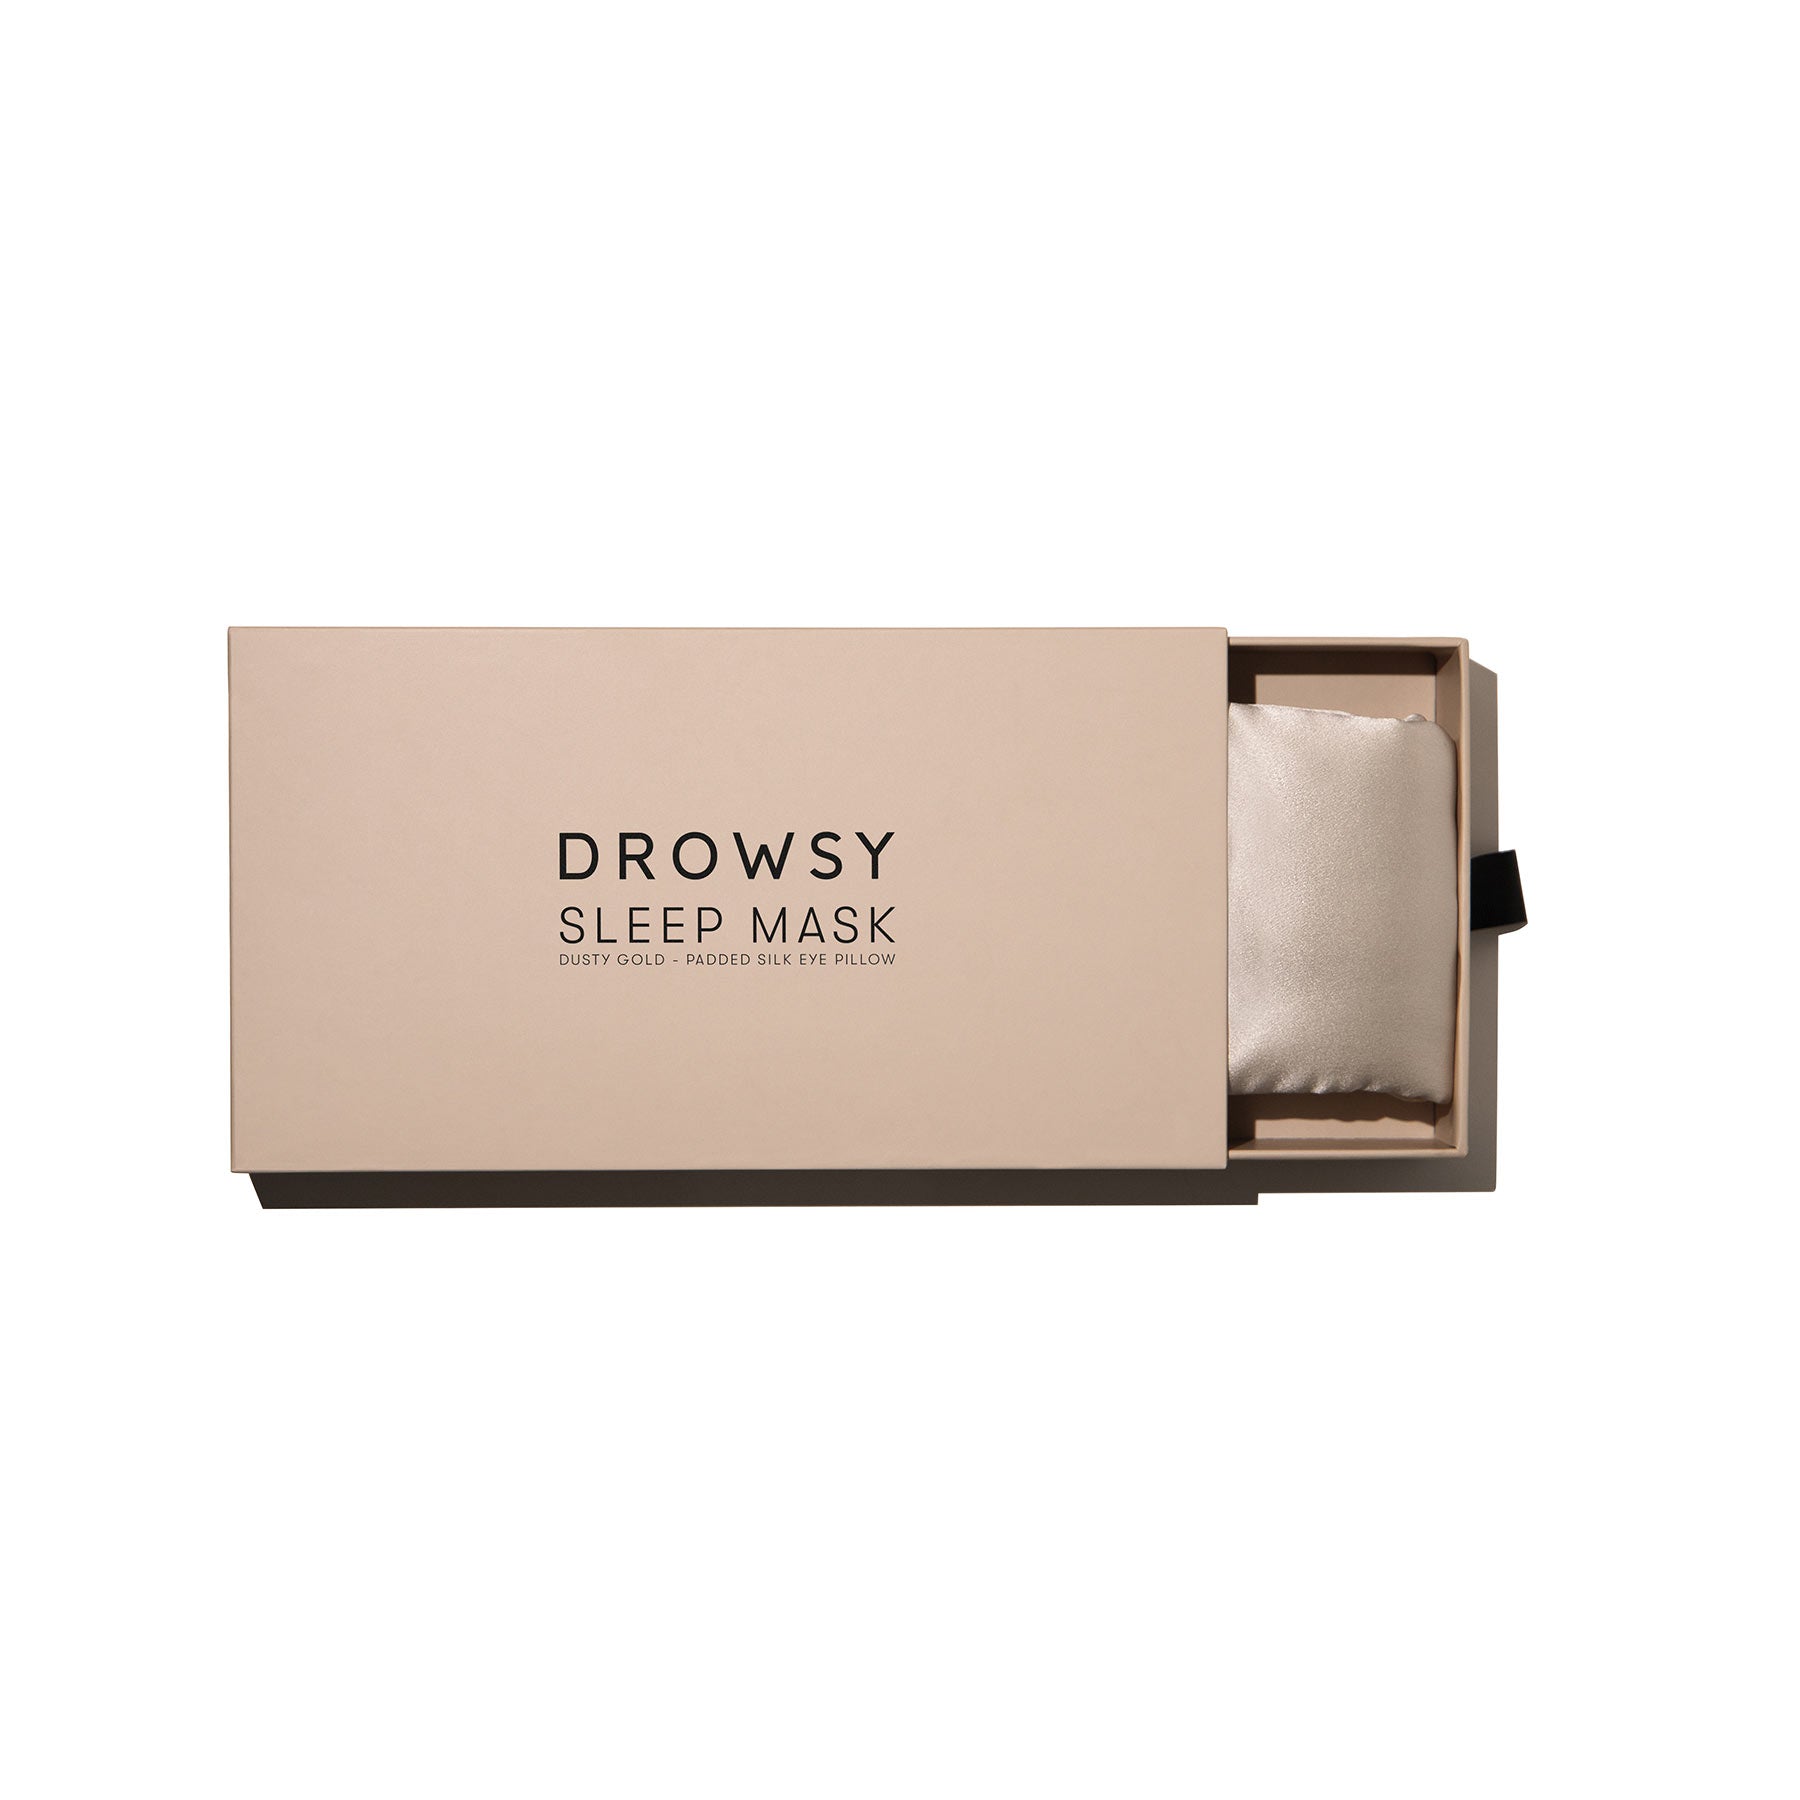 Drowsy Sleep Co. Dusty Gold Sleep Mask Box on white background